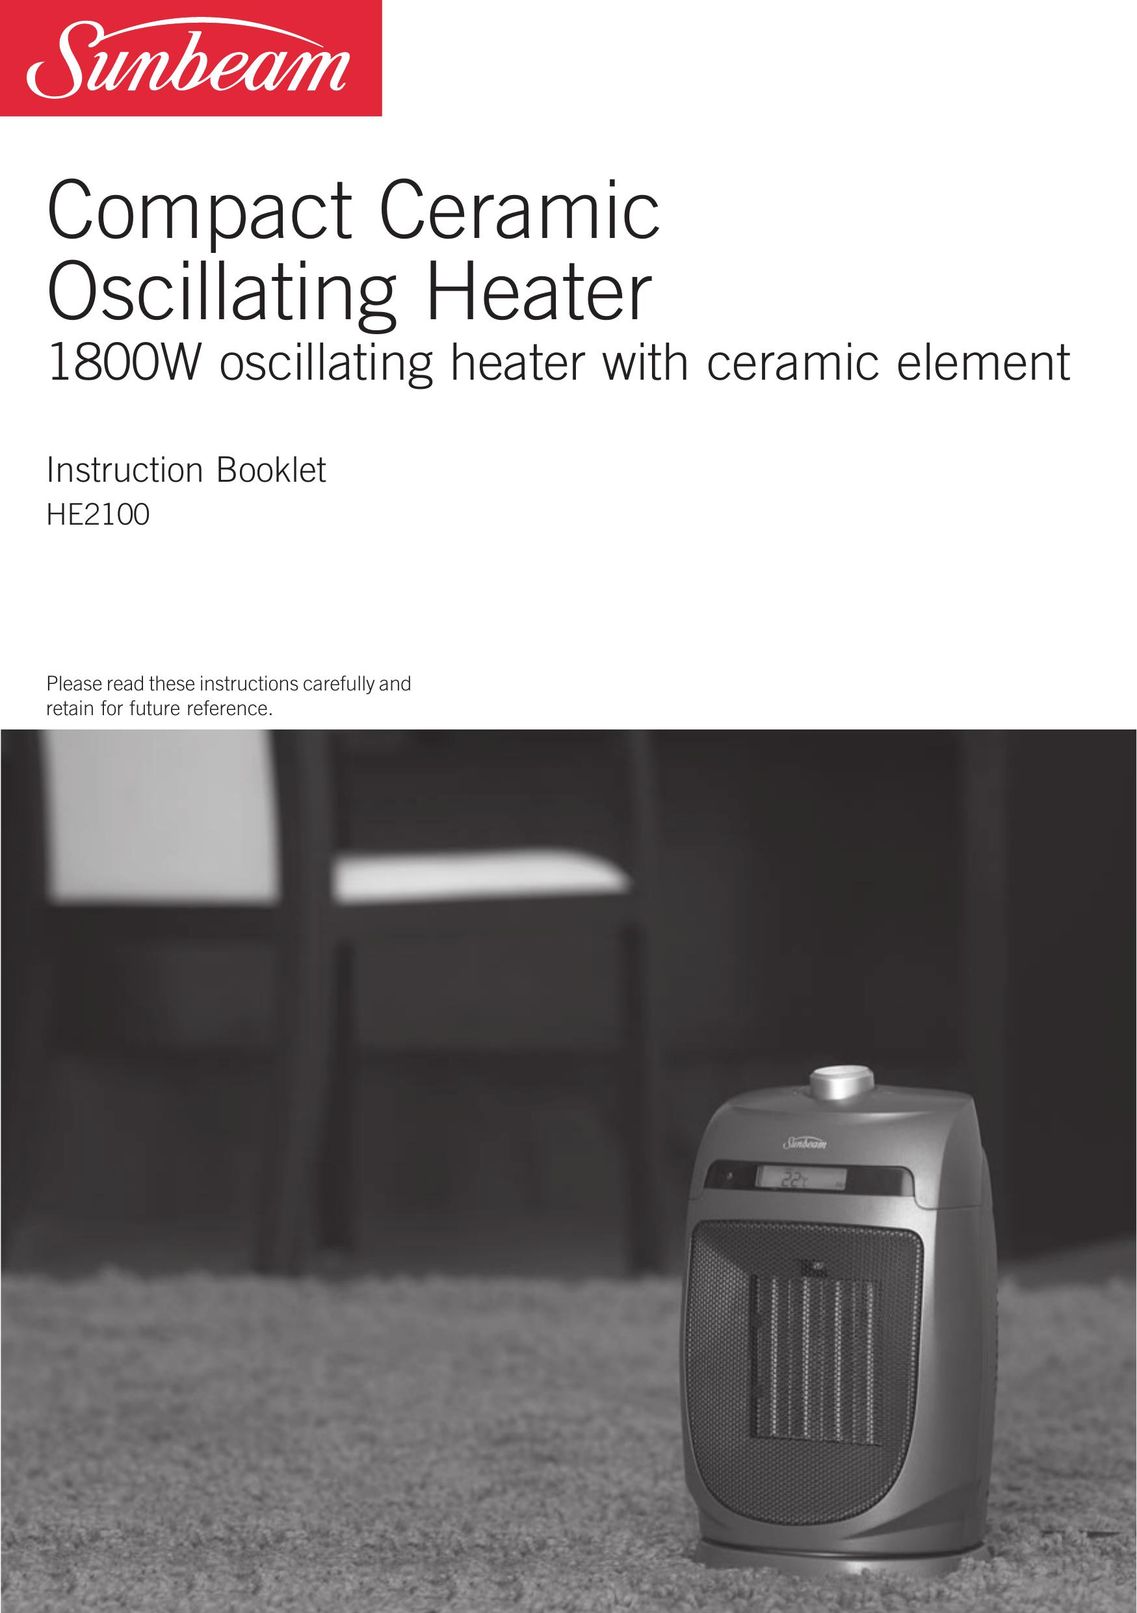 Sunbeam Bedding HE2100 Electric Heater User Manual